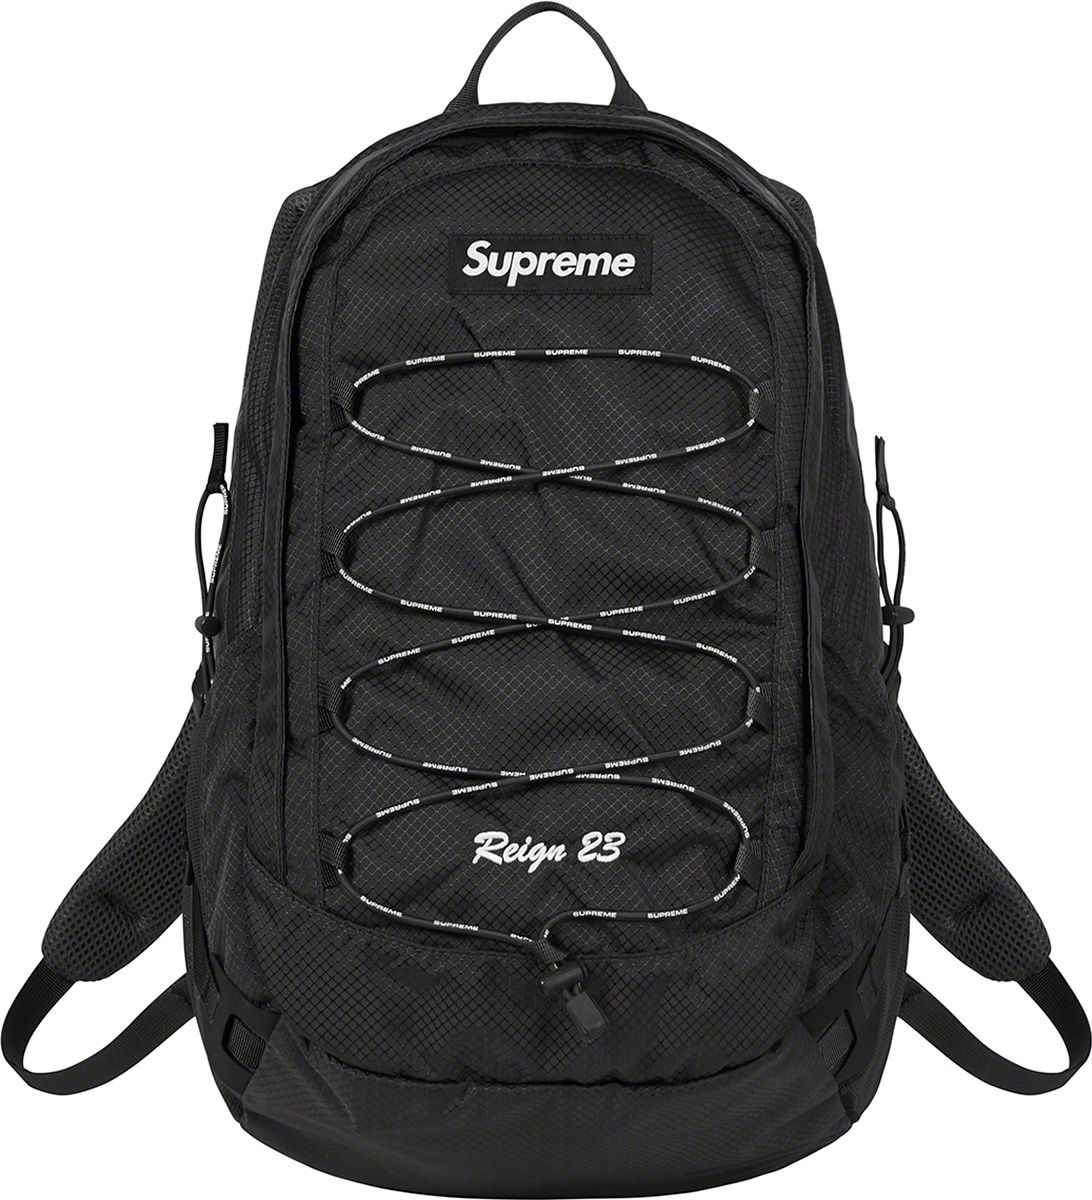 Supreme®/Vanson Leathers® Cordura® Mesh Duffle Bag - Spring/Summer 